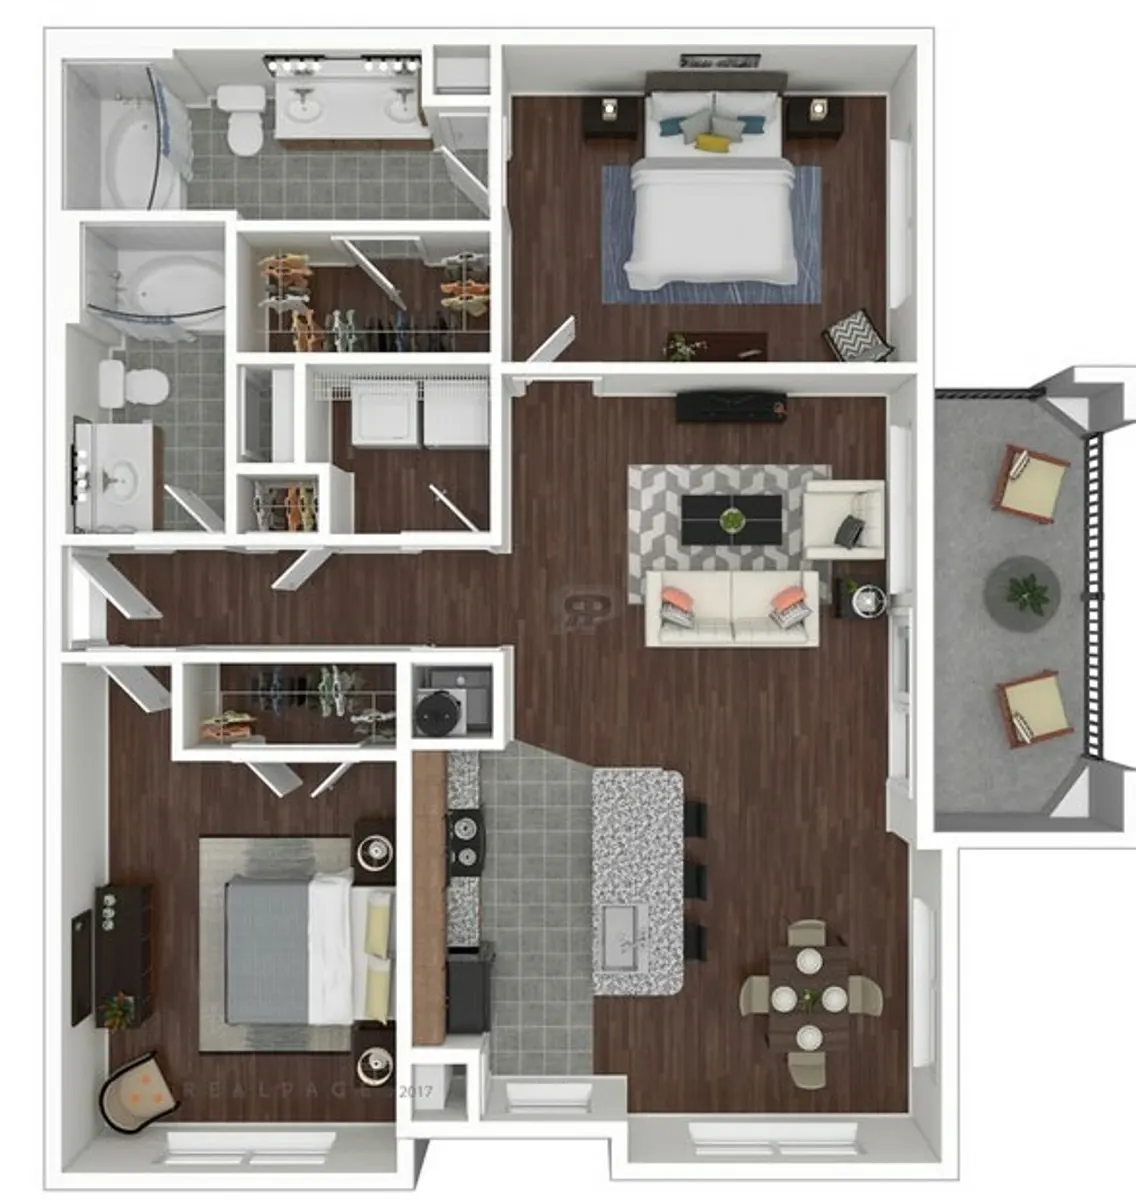 Haven at Main houston apartments floor plan 6